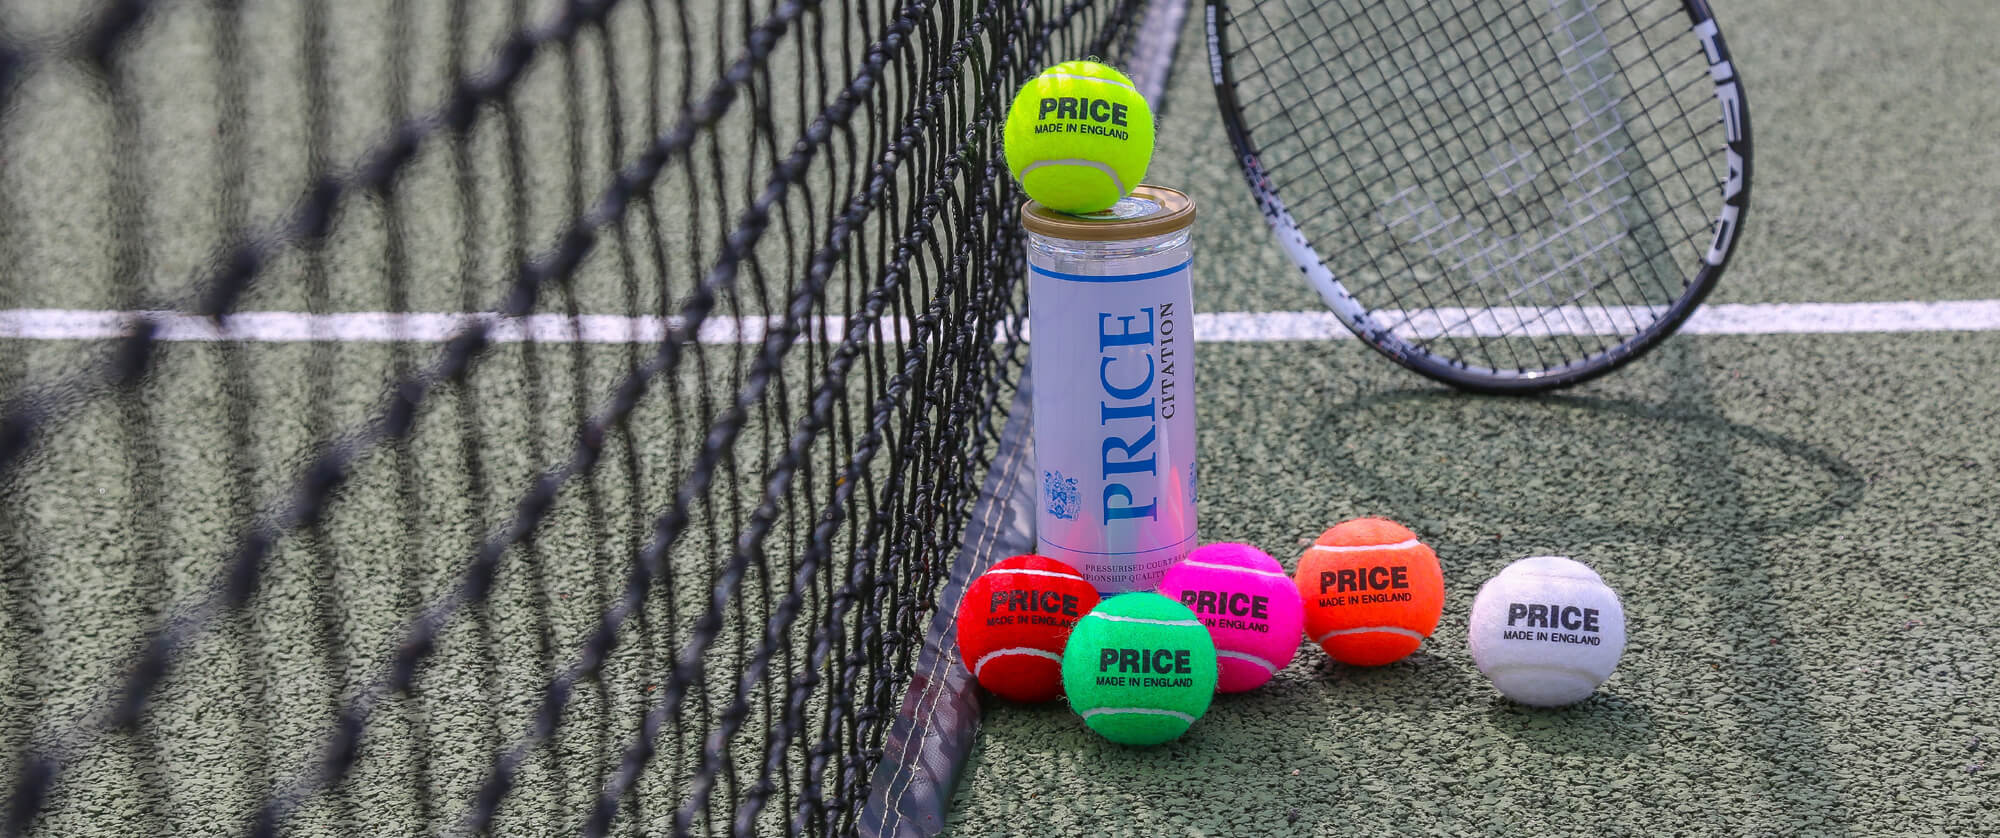 Tournament Tennis Balls